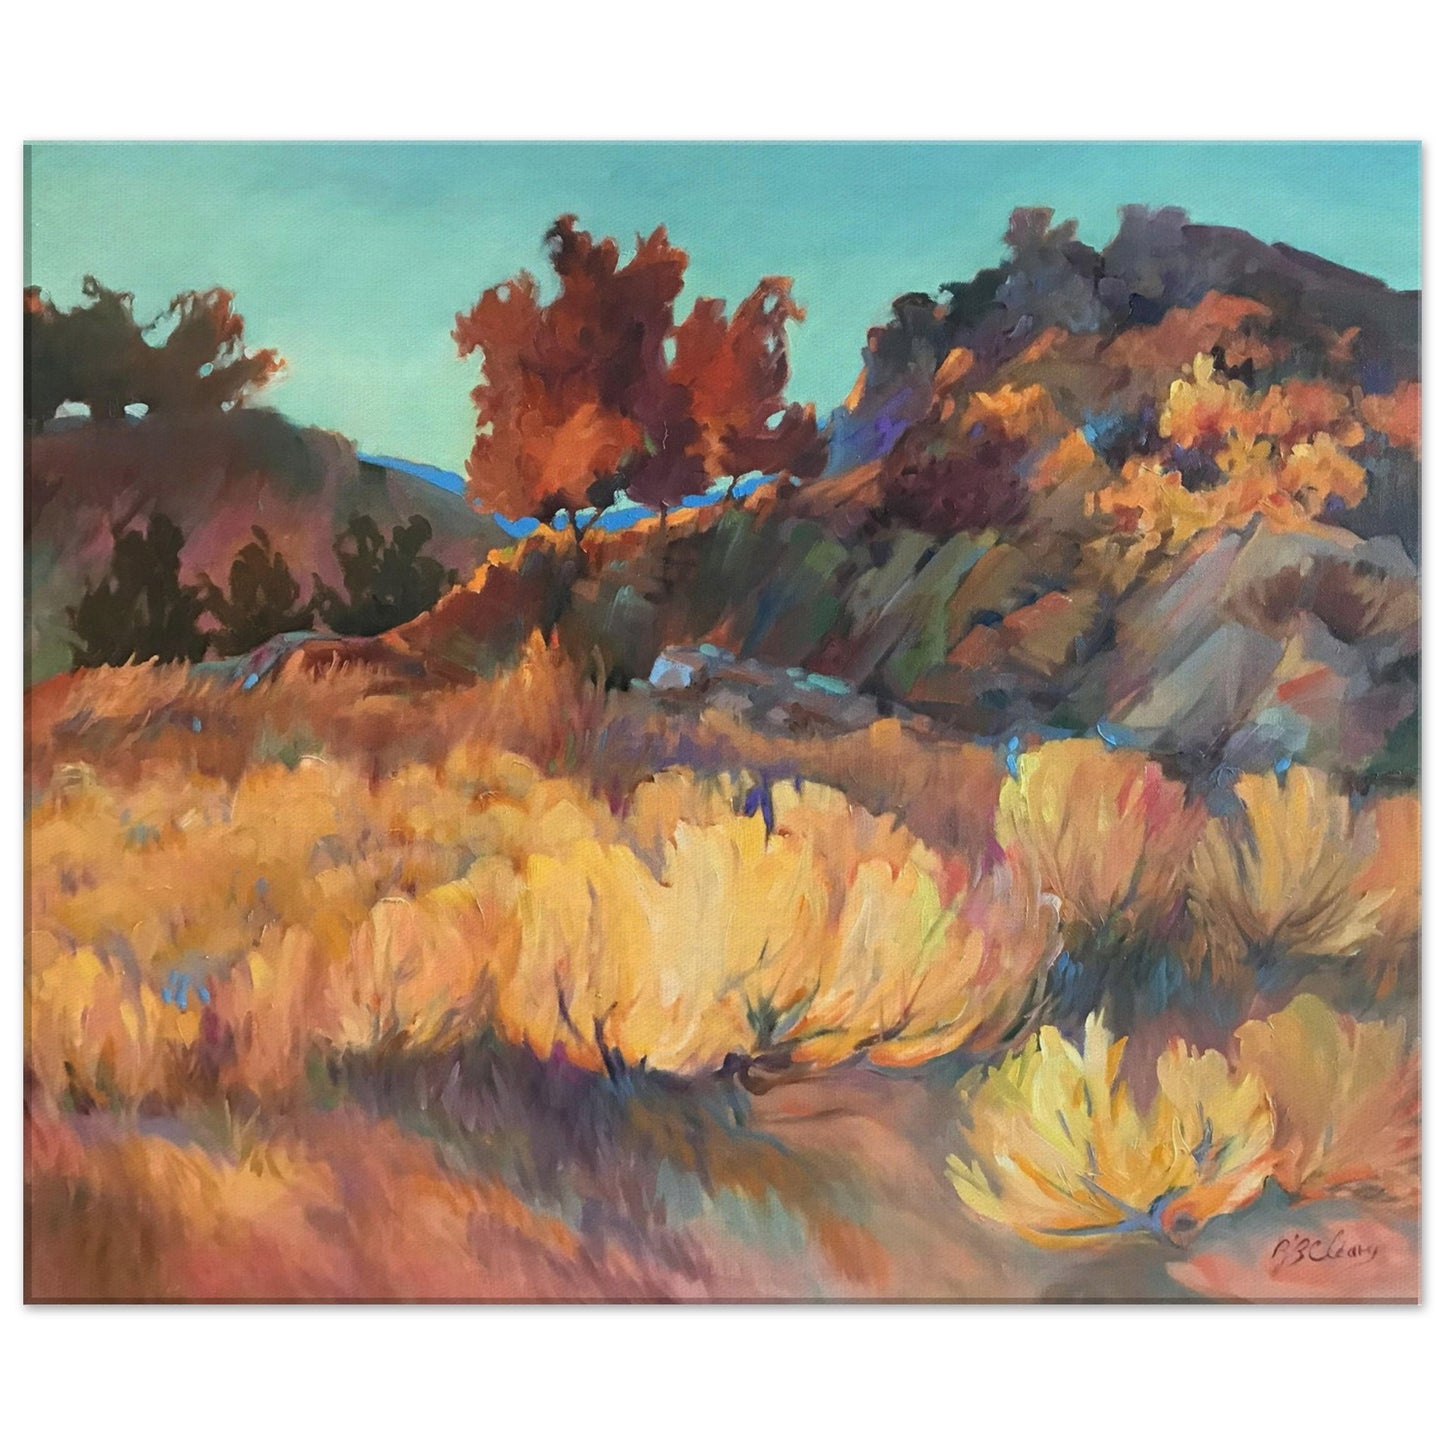 "Rock Ridge" Art Print 20x24 inch on Canvas Barbara Cleary Designs